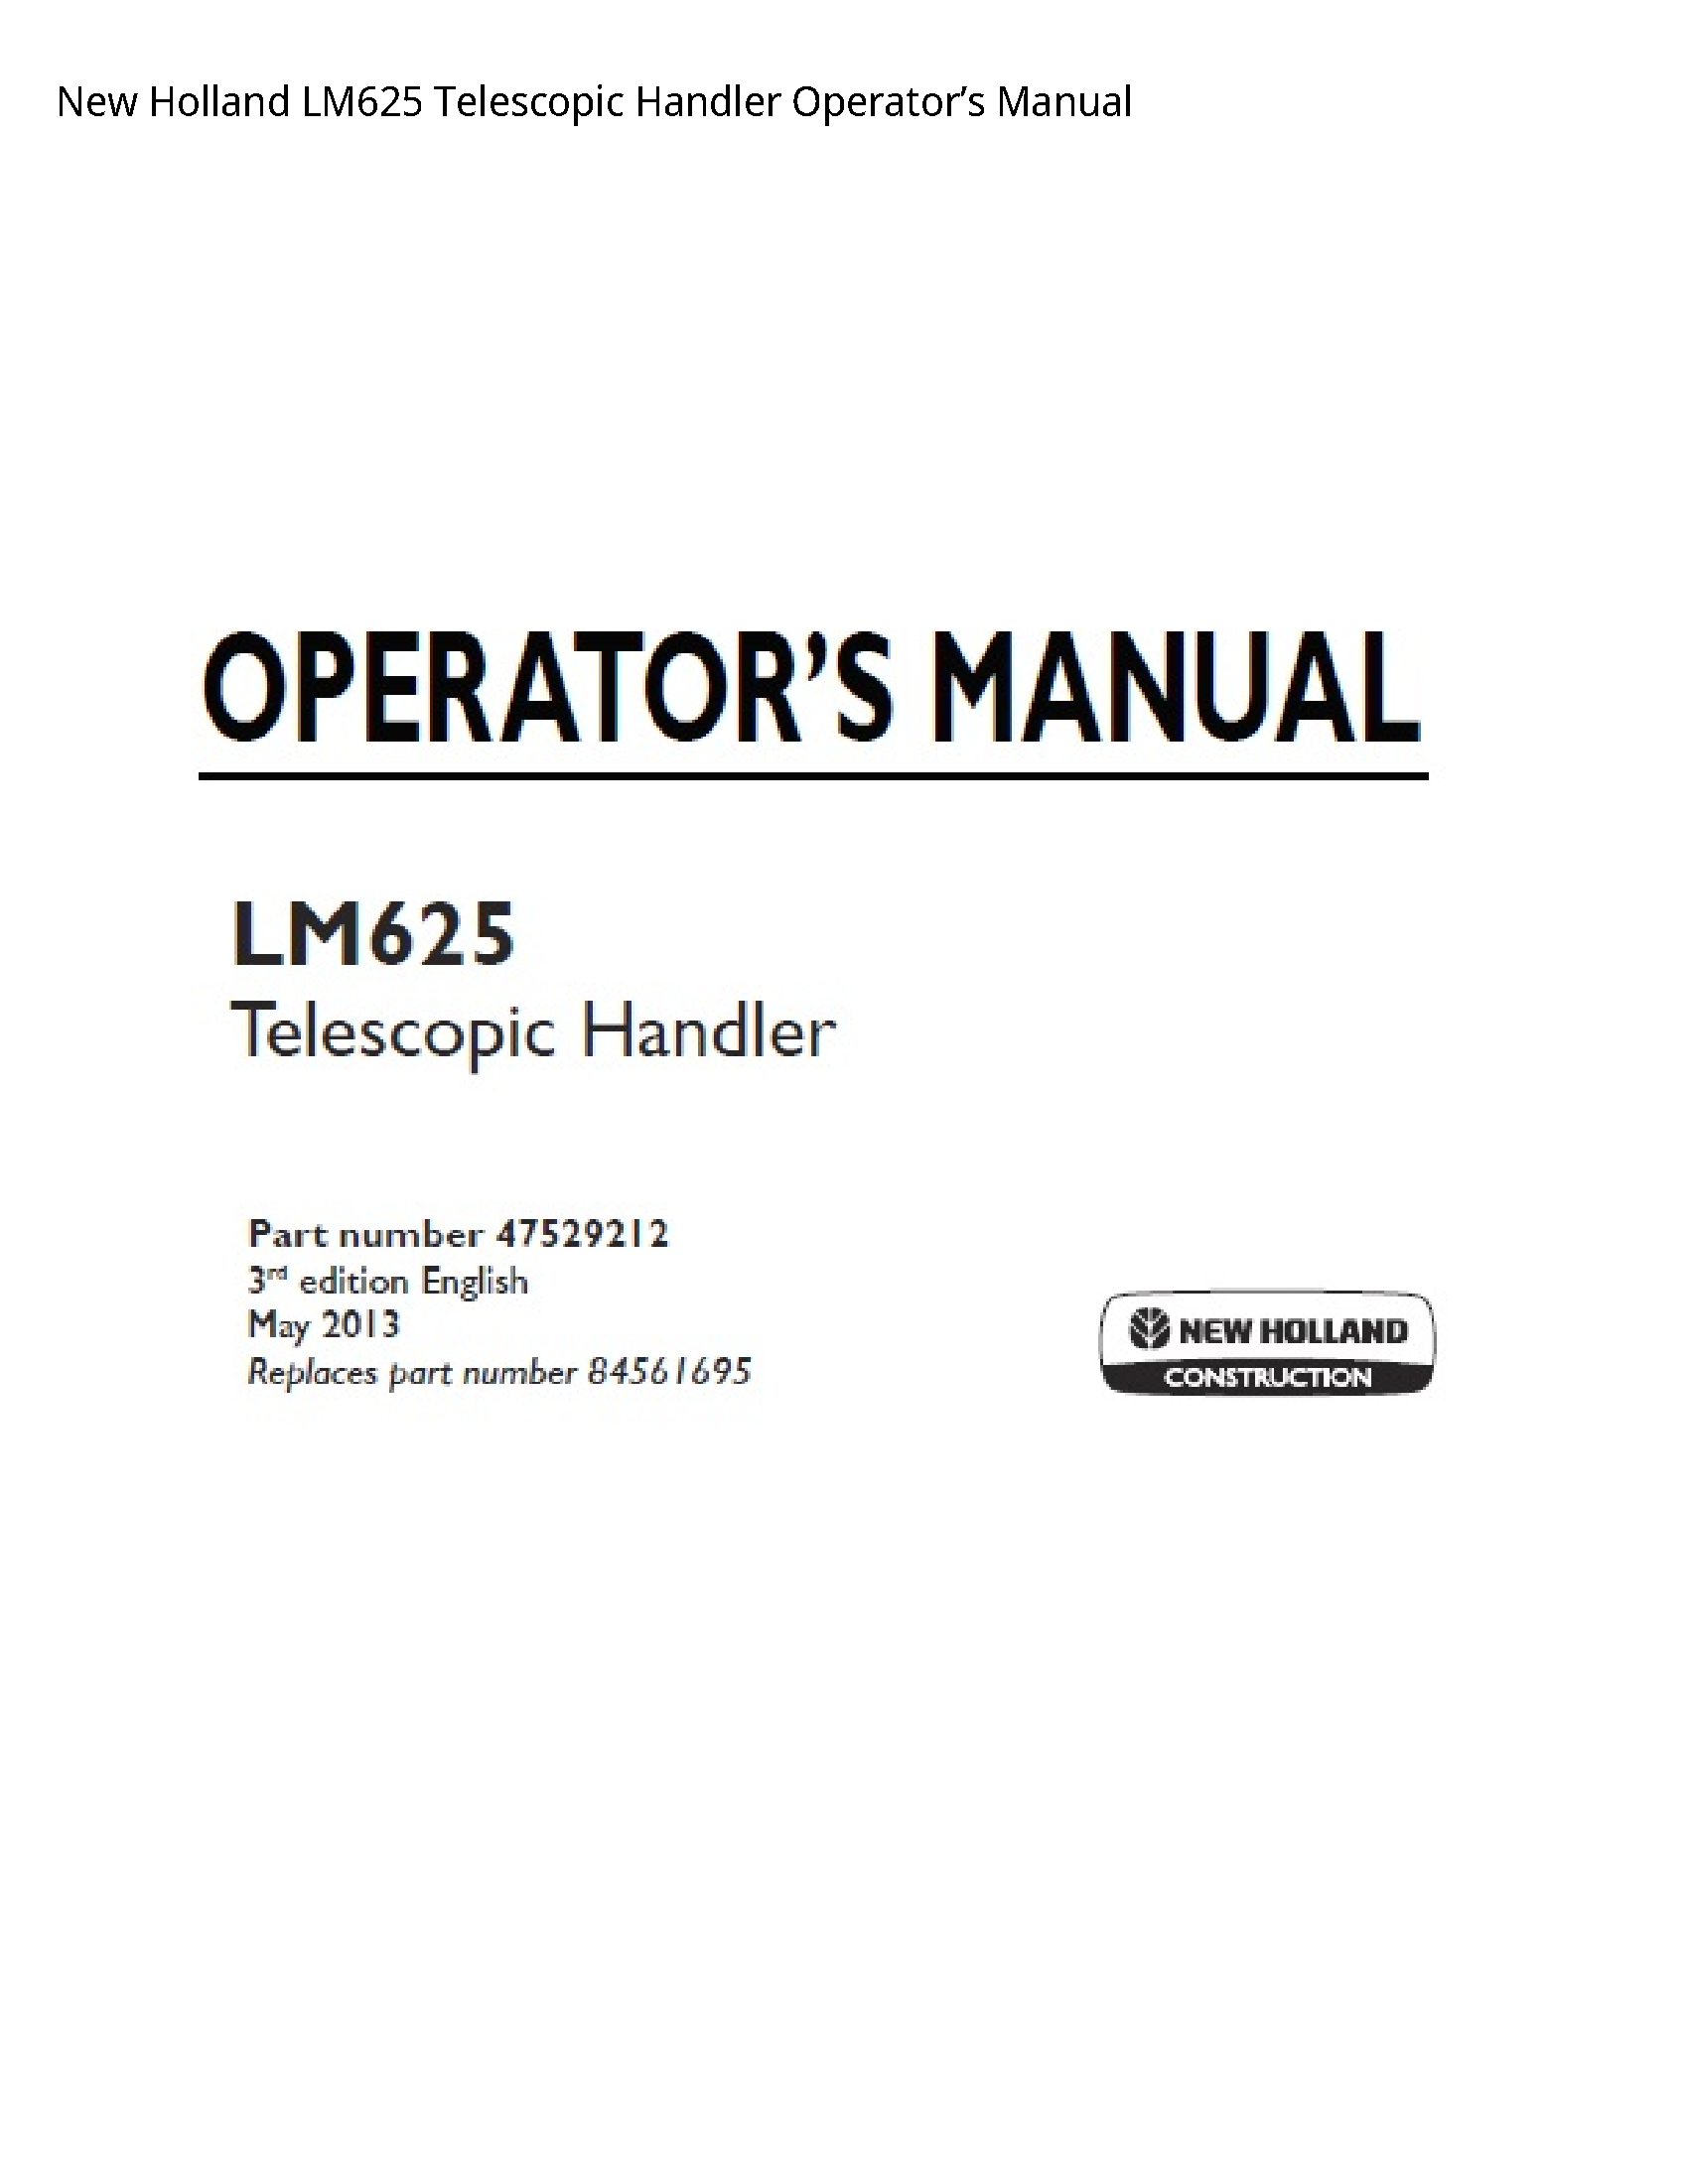 New Holland LM625 Telescopic Handler Operator’s manual